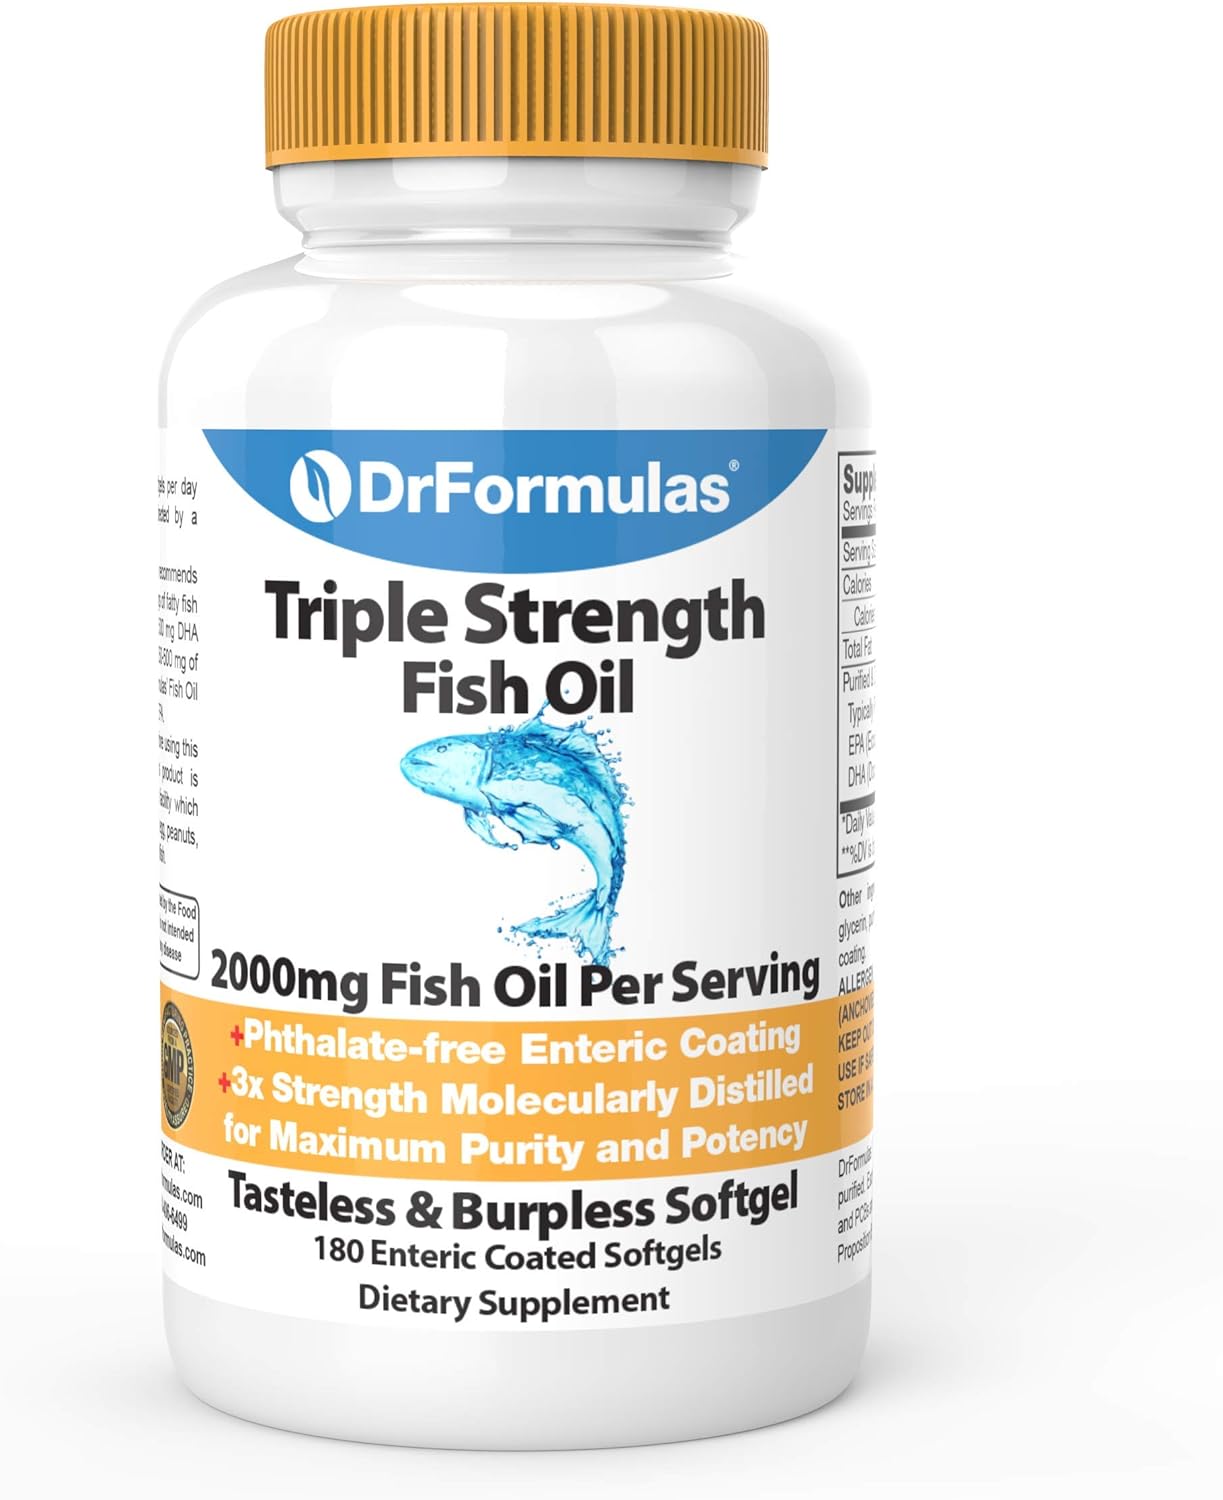 DrFormulas 2000mg Triple Strength Omega 3 Fish Oil with EPA and DHA, 180 Burpless Softgels